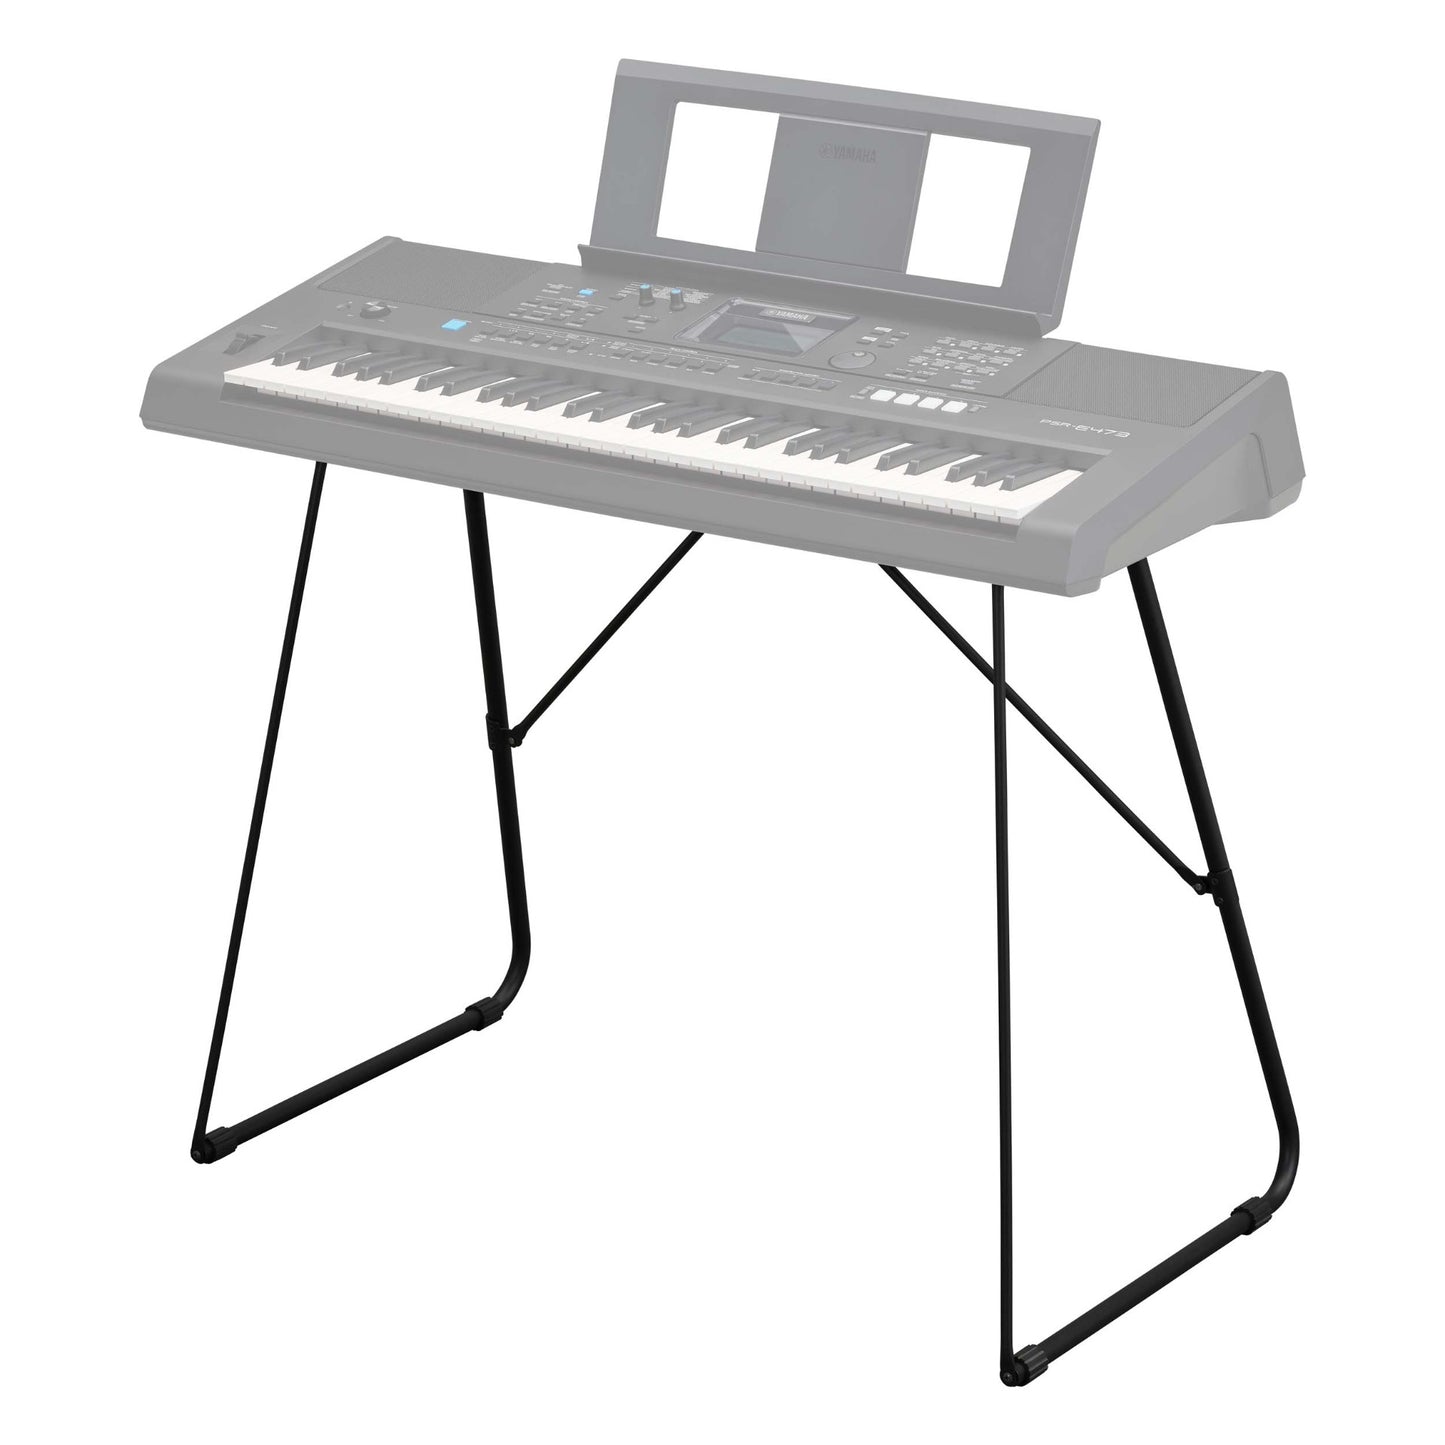 Yamaha PSRE473 61 Key Portable Keyboard